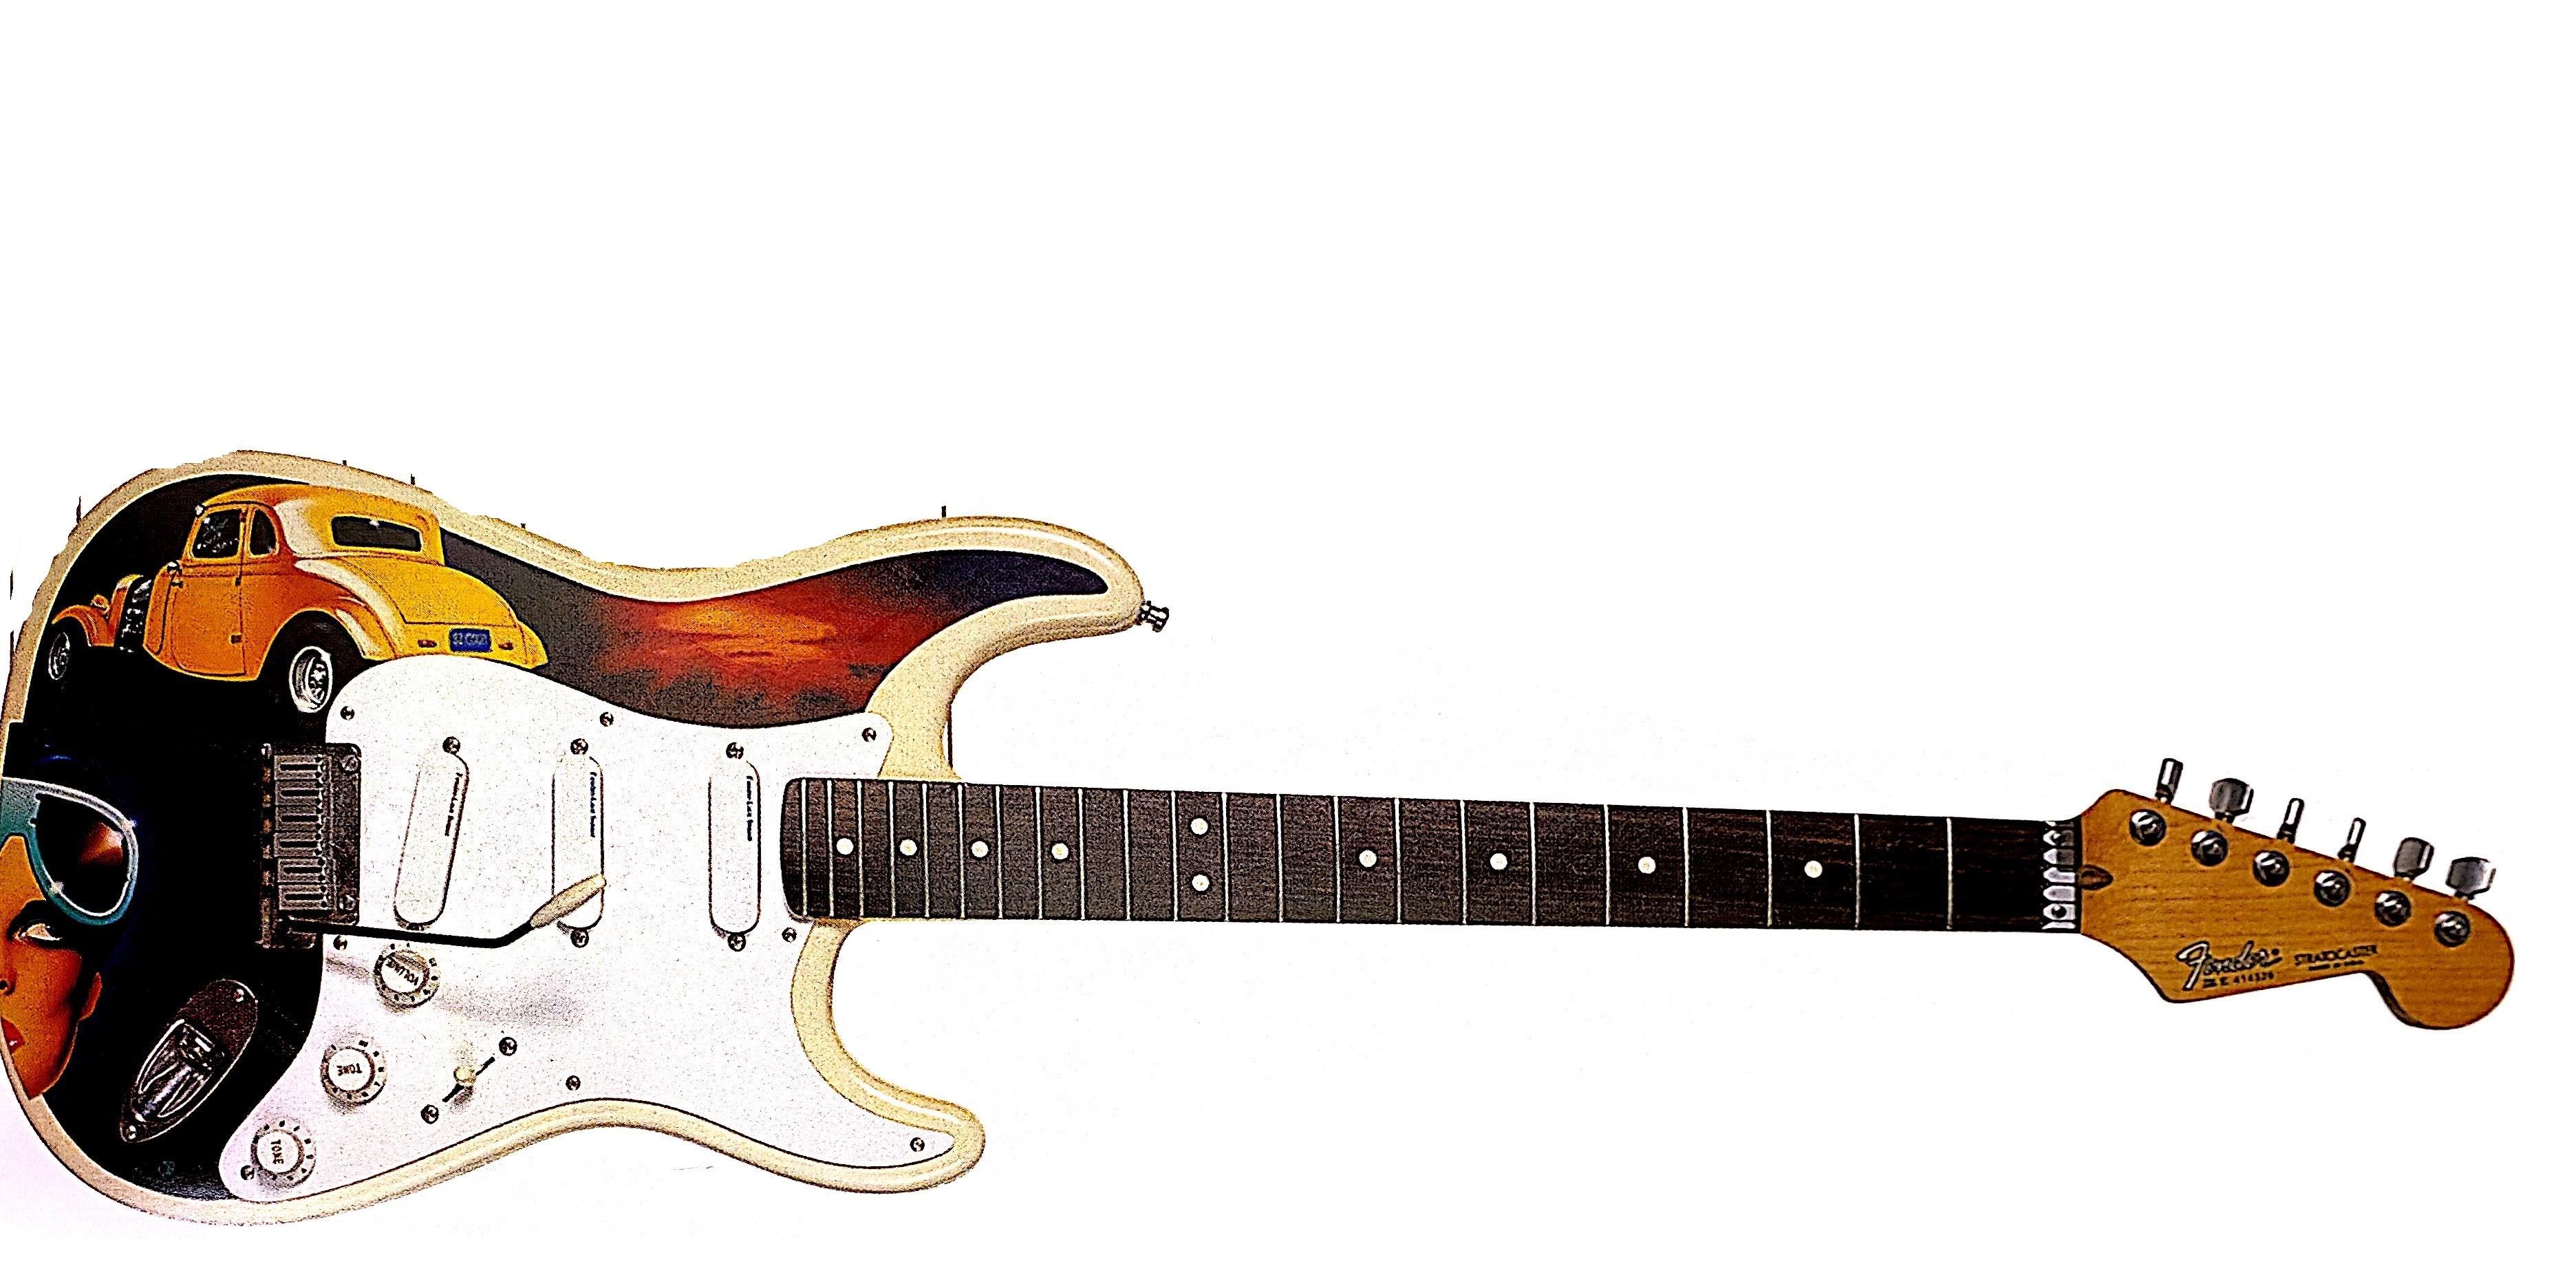 Fender品牌_电吉他_Made in Japan Hybrid_5657600309 产品介绍 - FAST发时达乐器